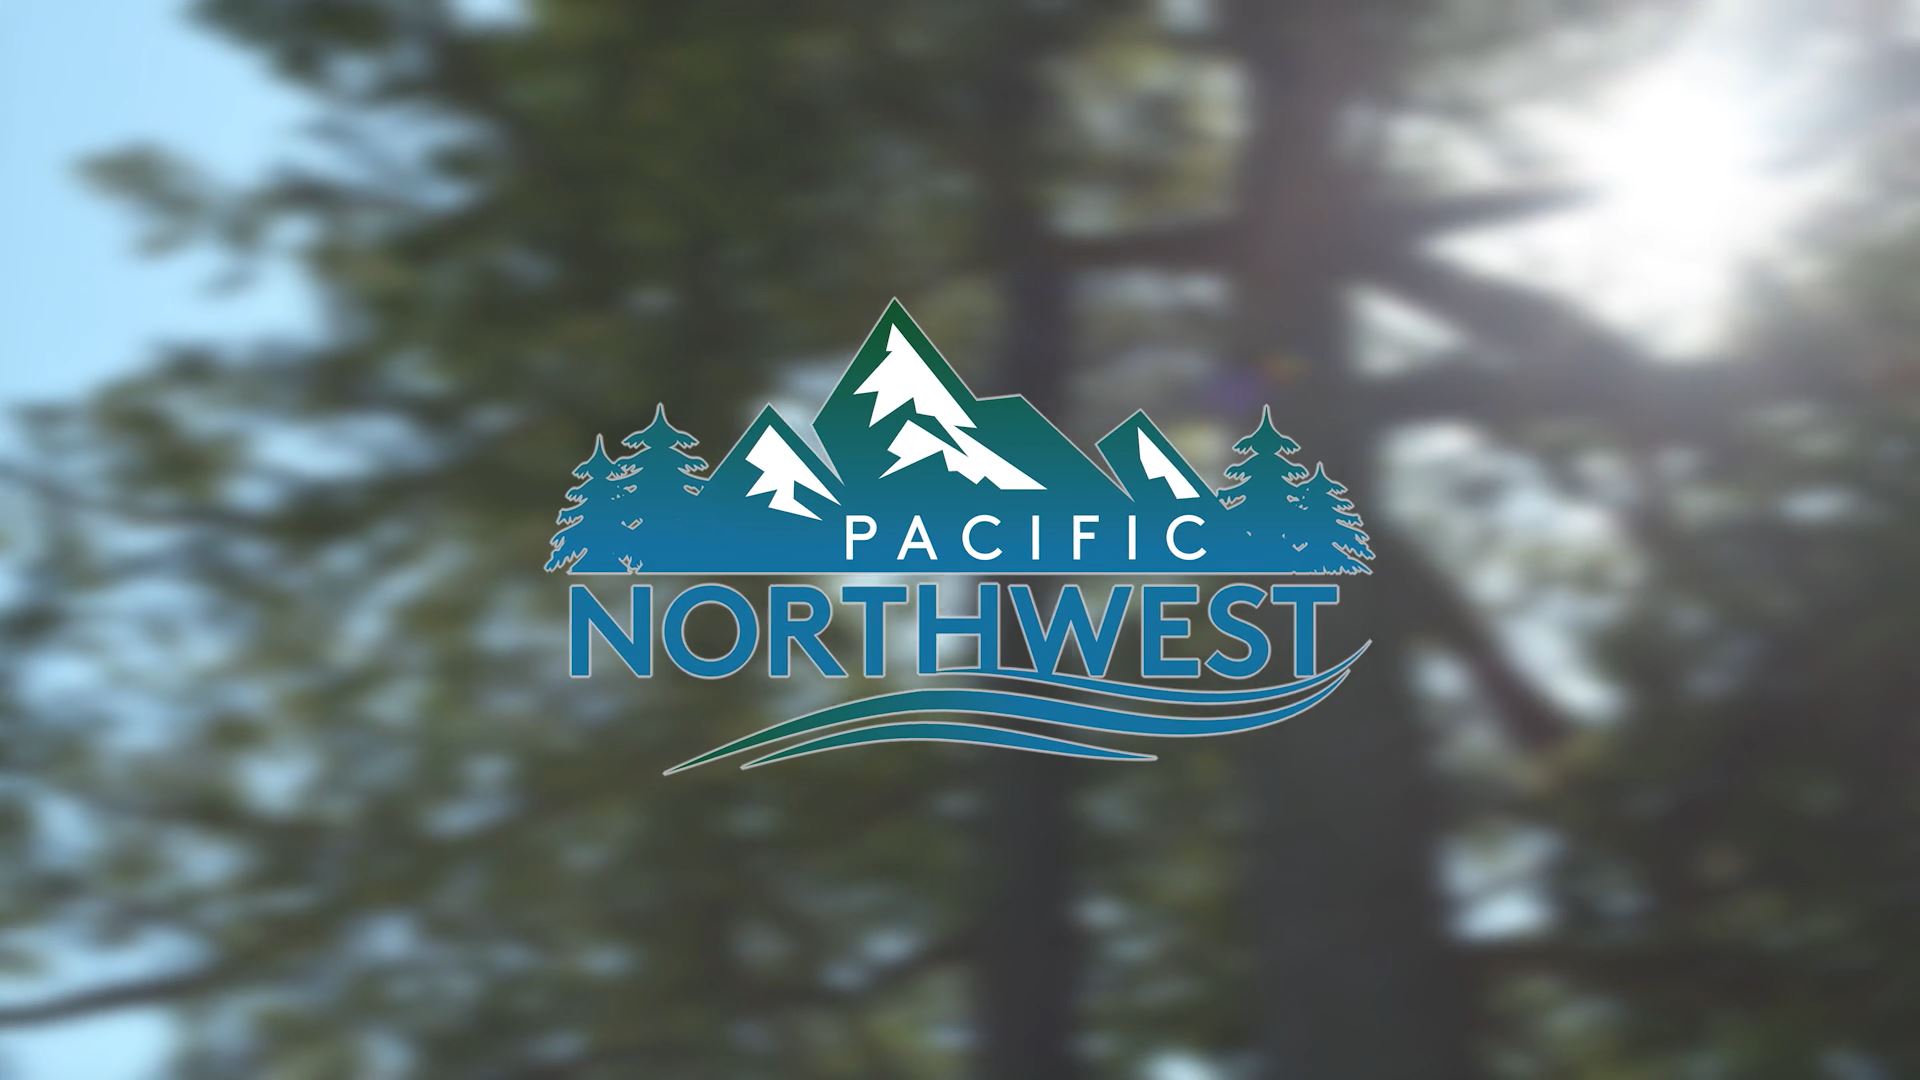 The Comcast Pacific Northwest logo.